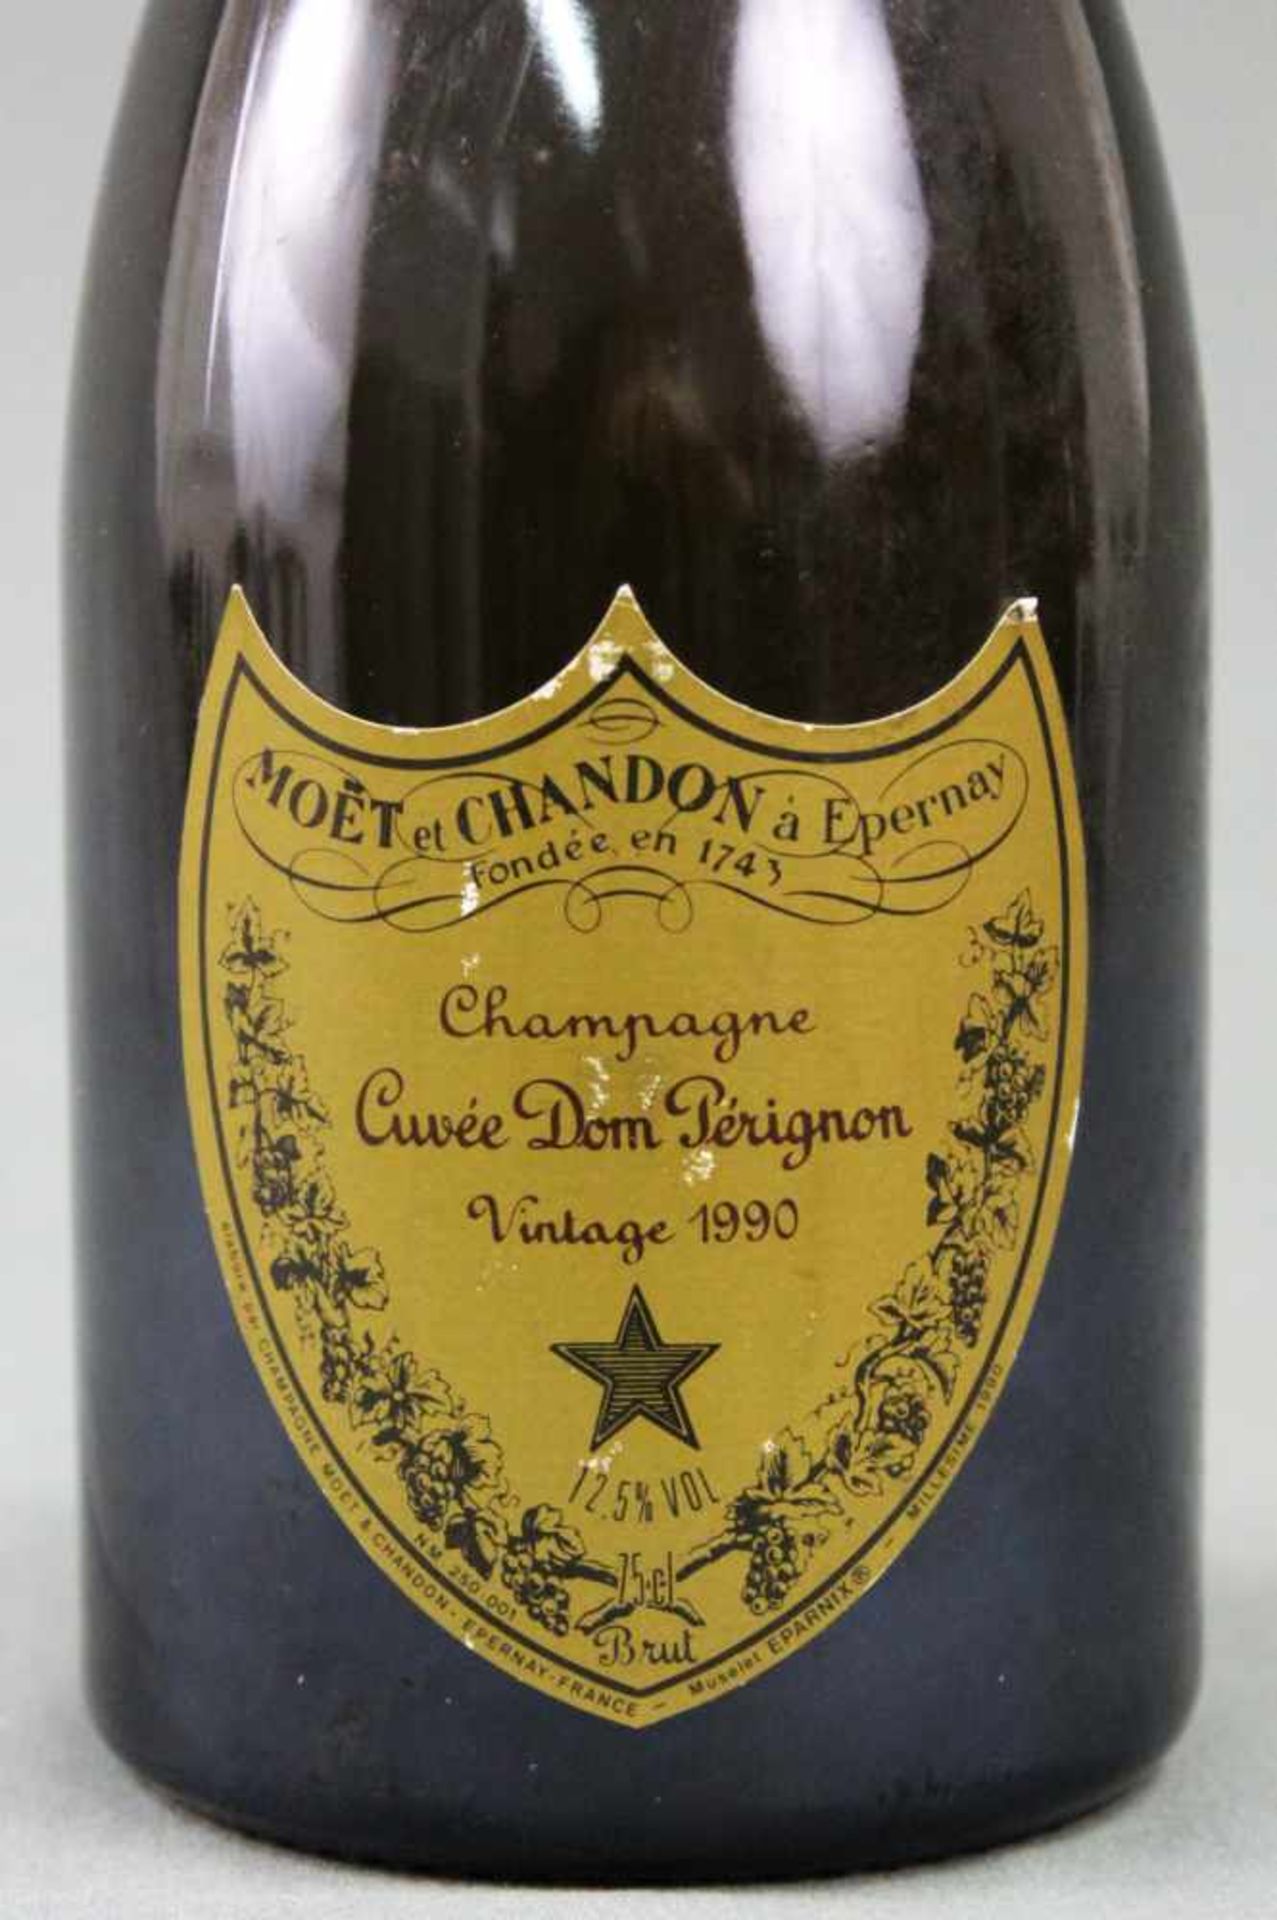 1990 Champagne. Cuvee Dom Perignon. Vintage.Moet et Chandon a Epernay. Fondee en 1743. Eine ganze - Bild 3 aus 8